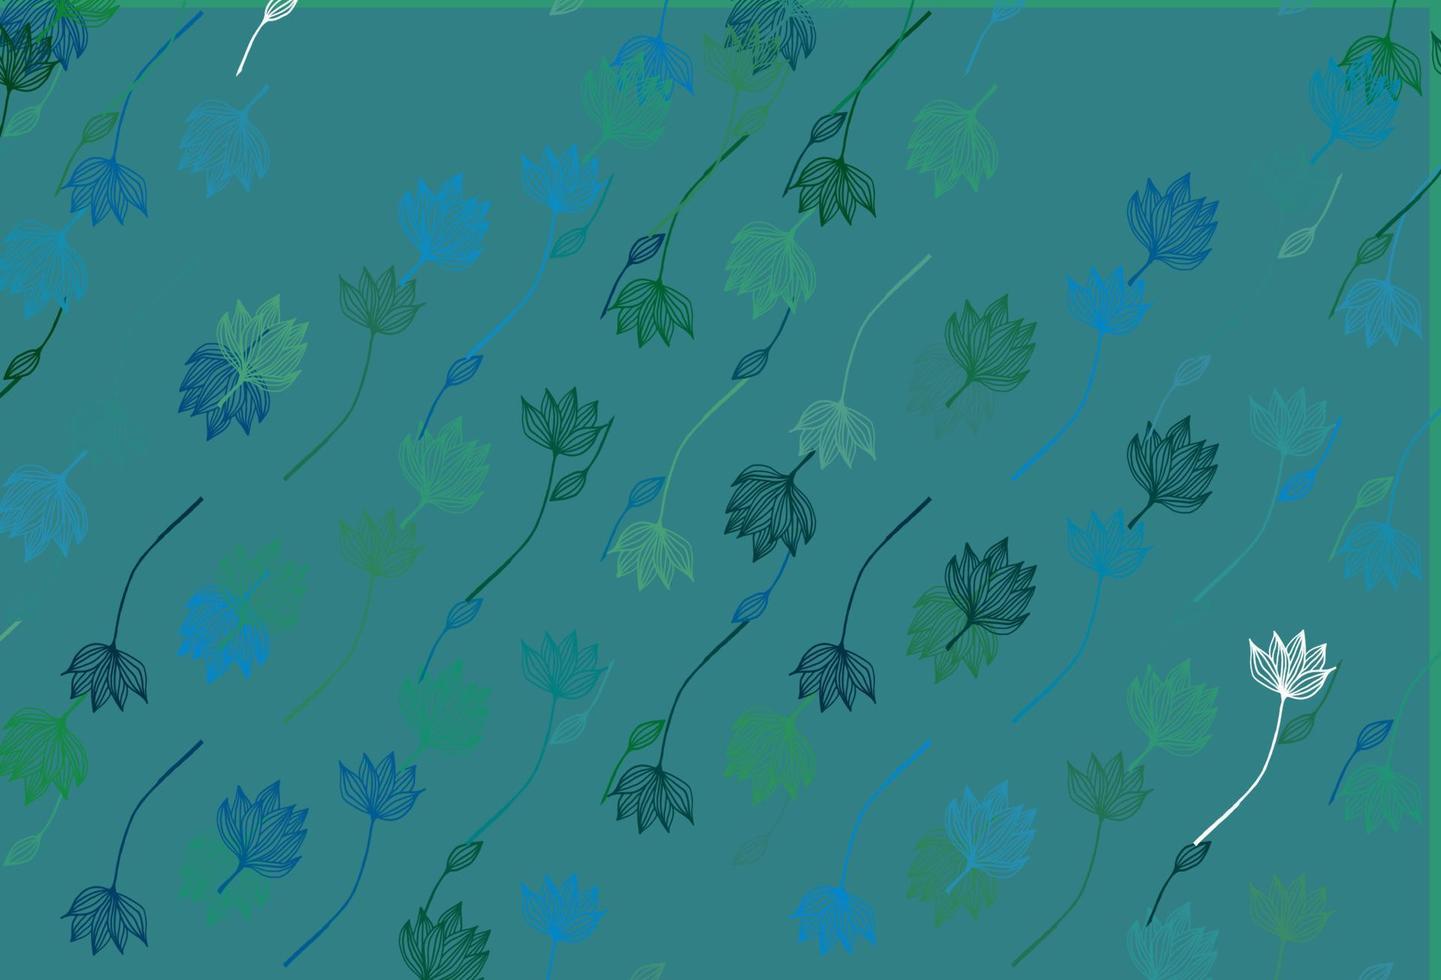 motif de griffonnage vectoriel bleu clair et vert.